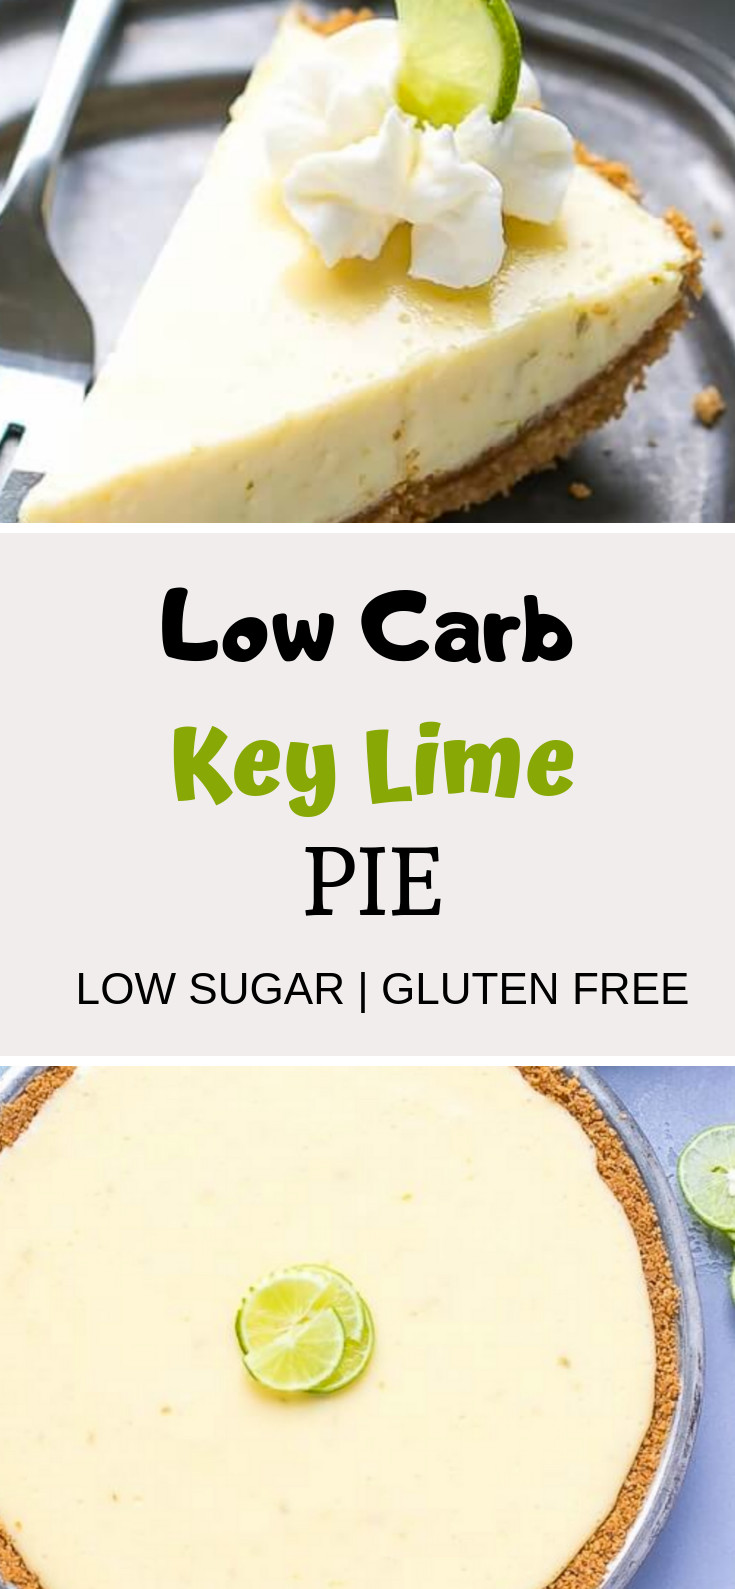 Low Carb Key Lime Pie
 Healthy Low Carb Key Lime Pie Recipe